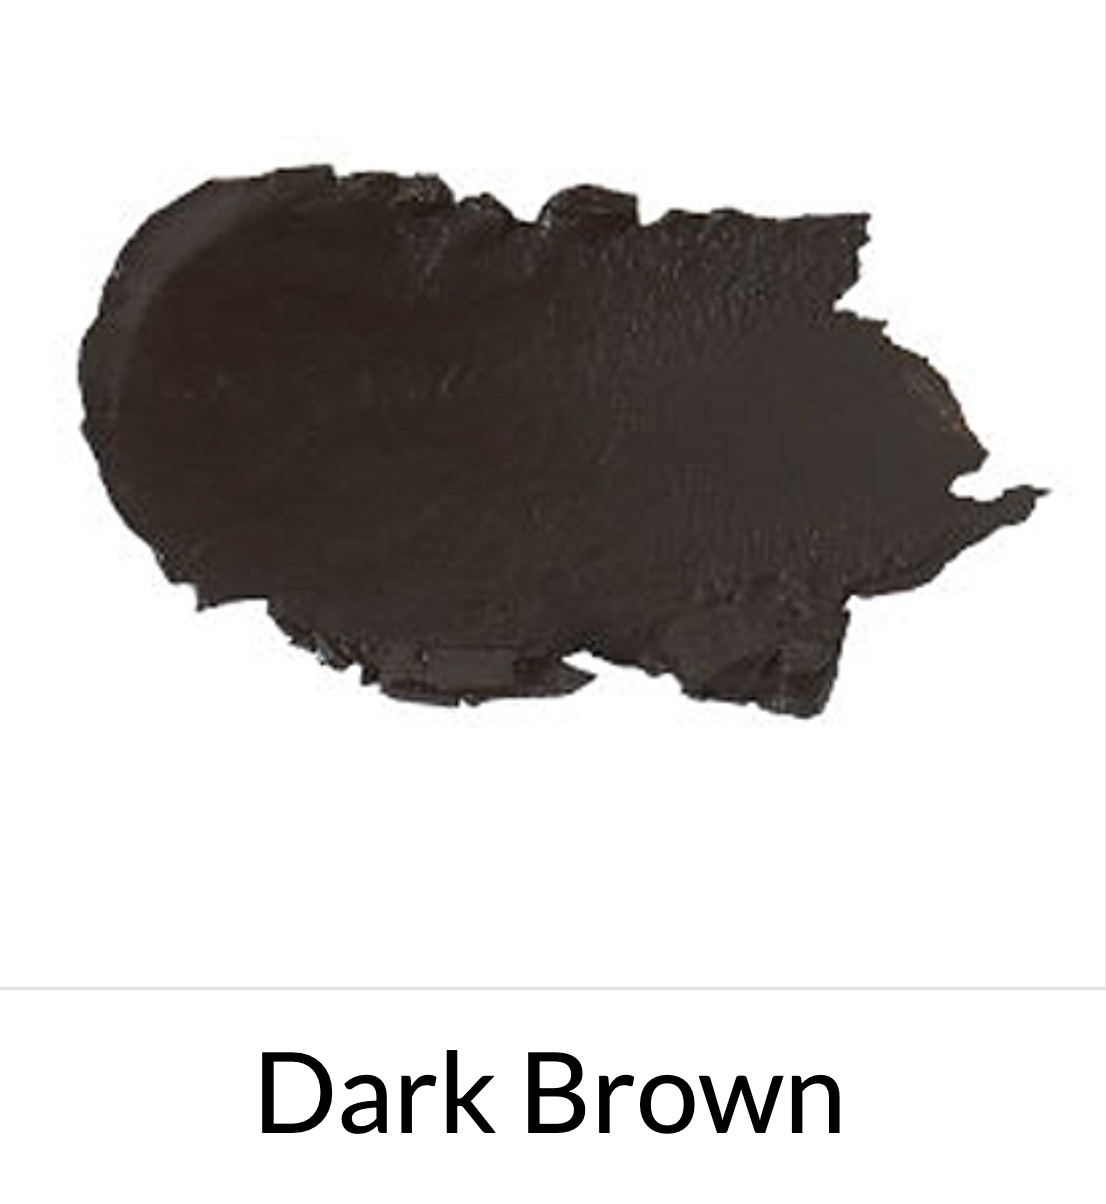 Brow Pow Dark Brown Eyebrow Gel color swatch